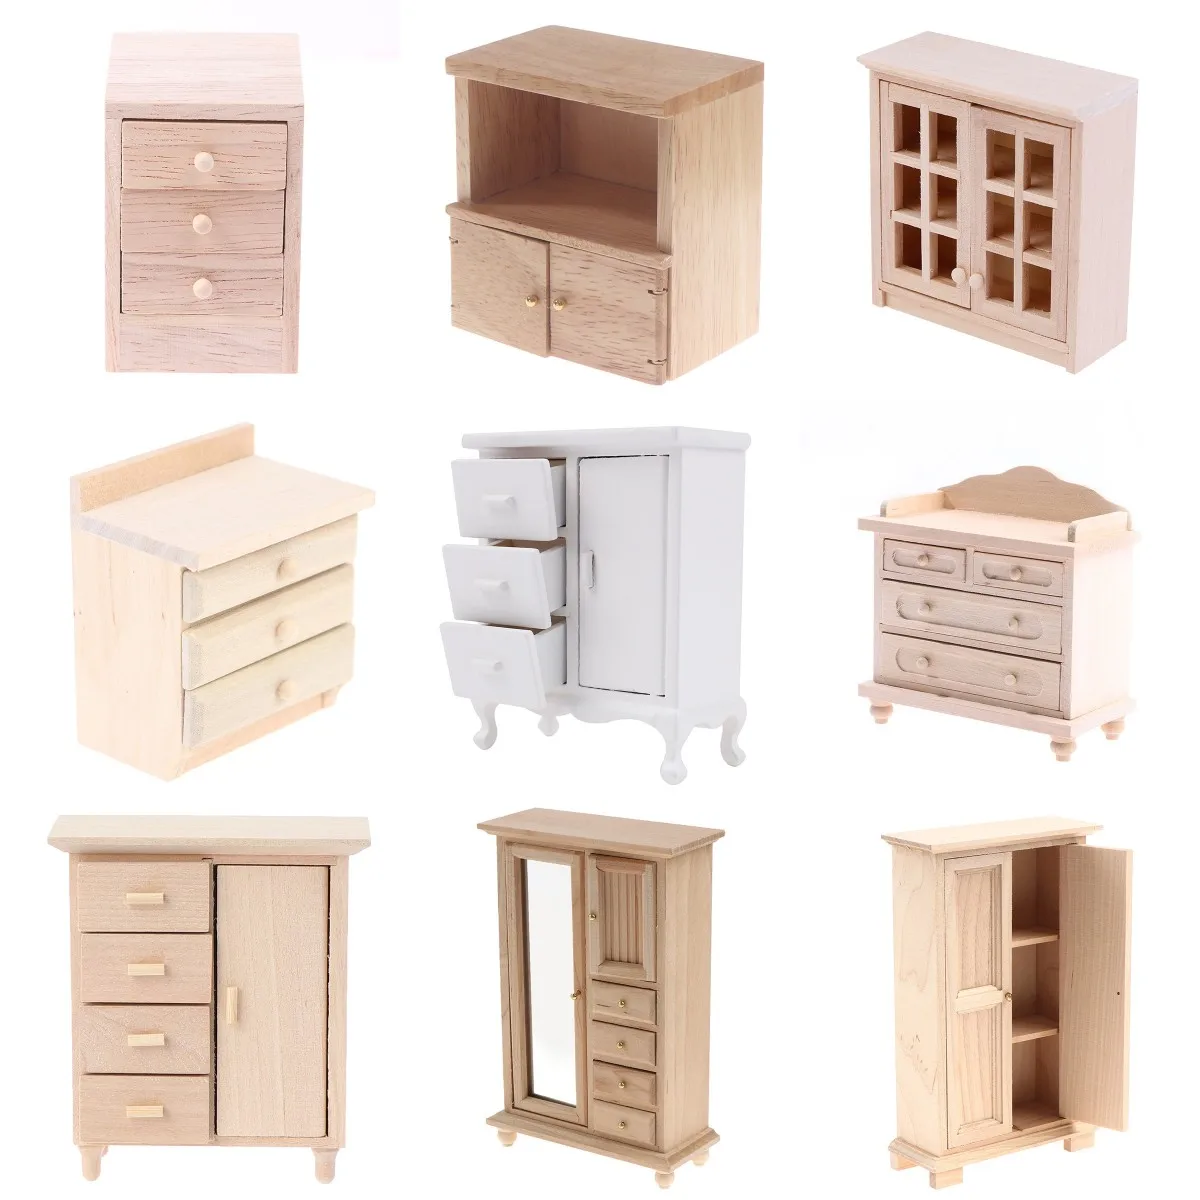 1/12 Dollhouse Miniature Furniture Wood Table Mini Room P0G4 Cabinet L Side K8D7 